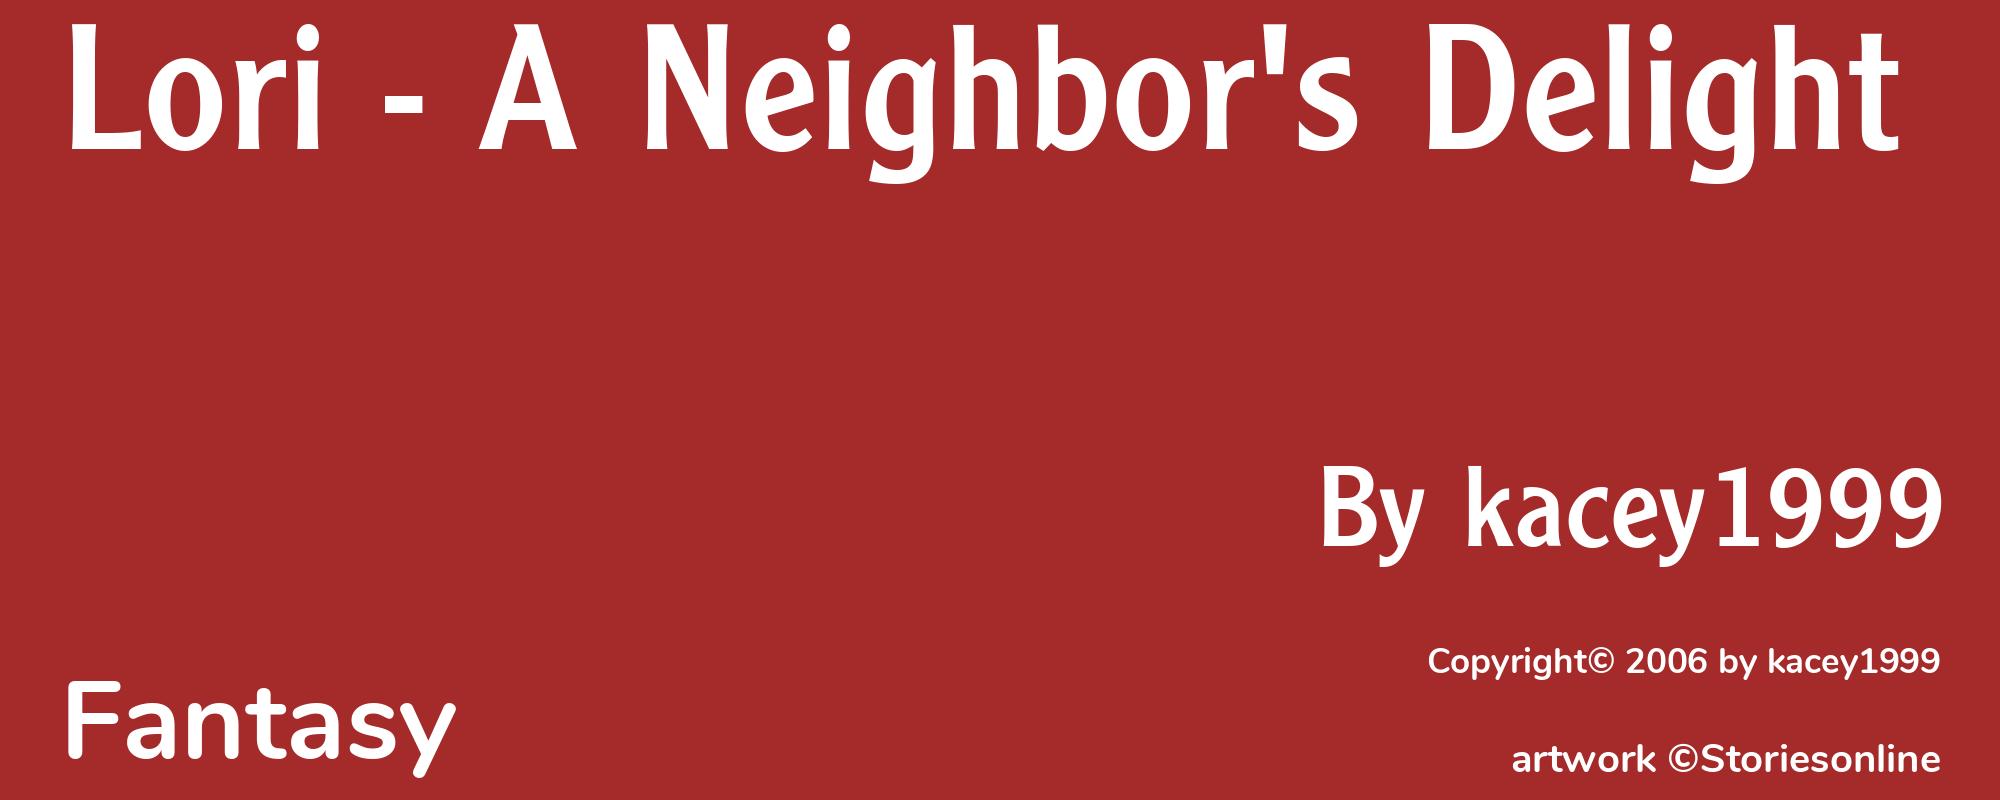 Lori - A Neighbor's Delight - Cover